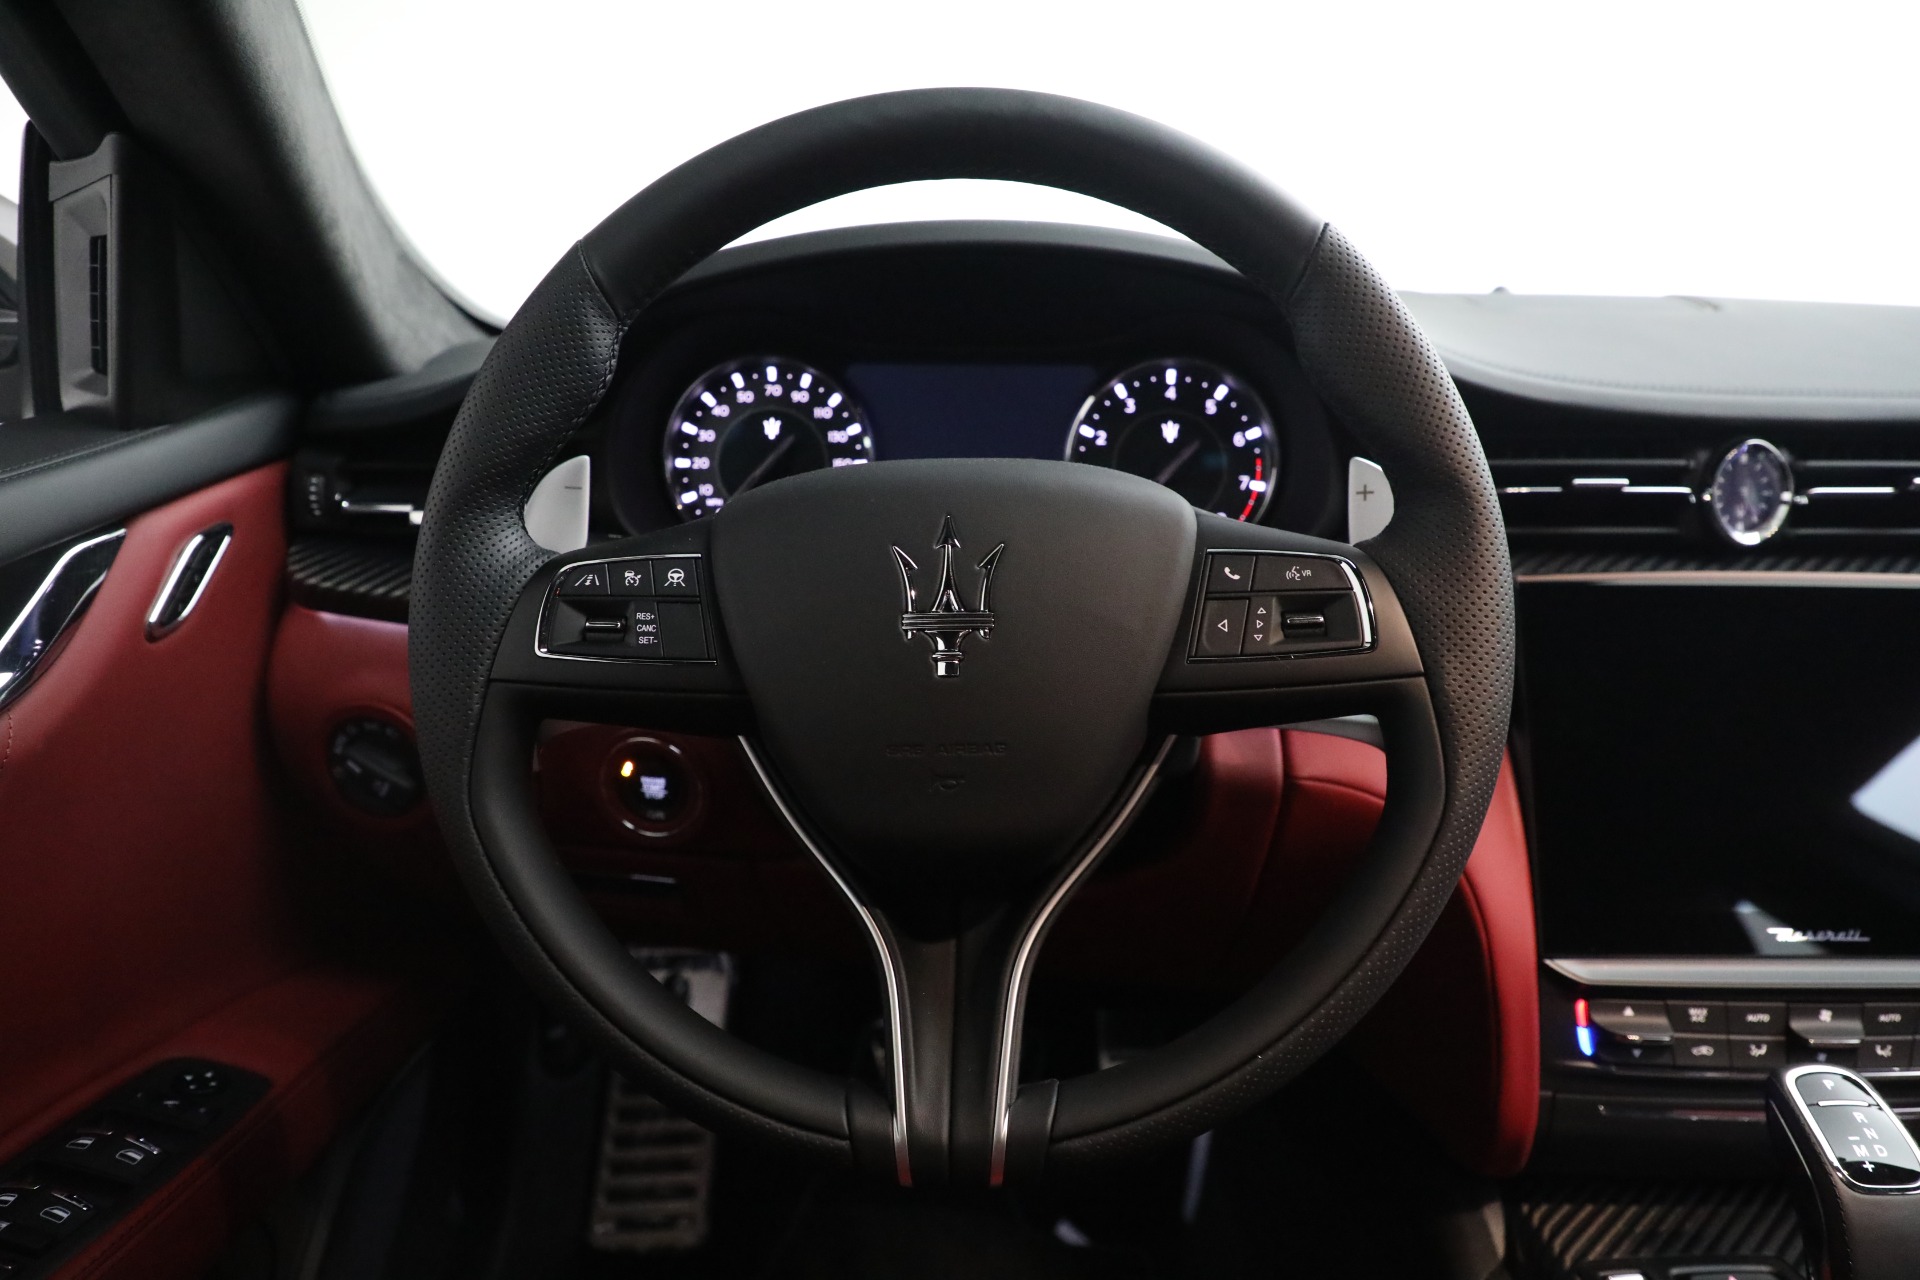 New-2022-Maserati-Quattroporte-Modena-Q4